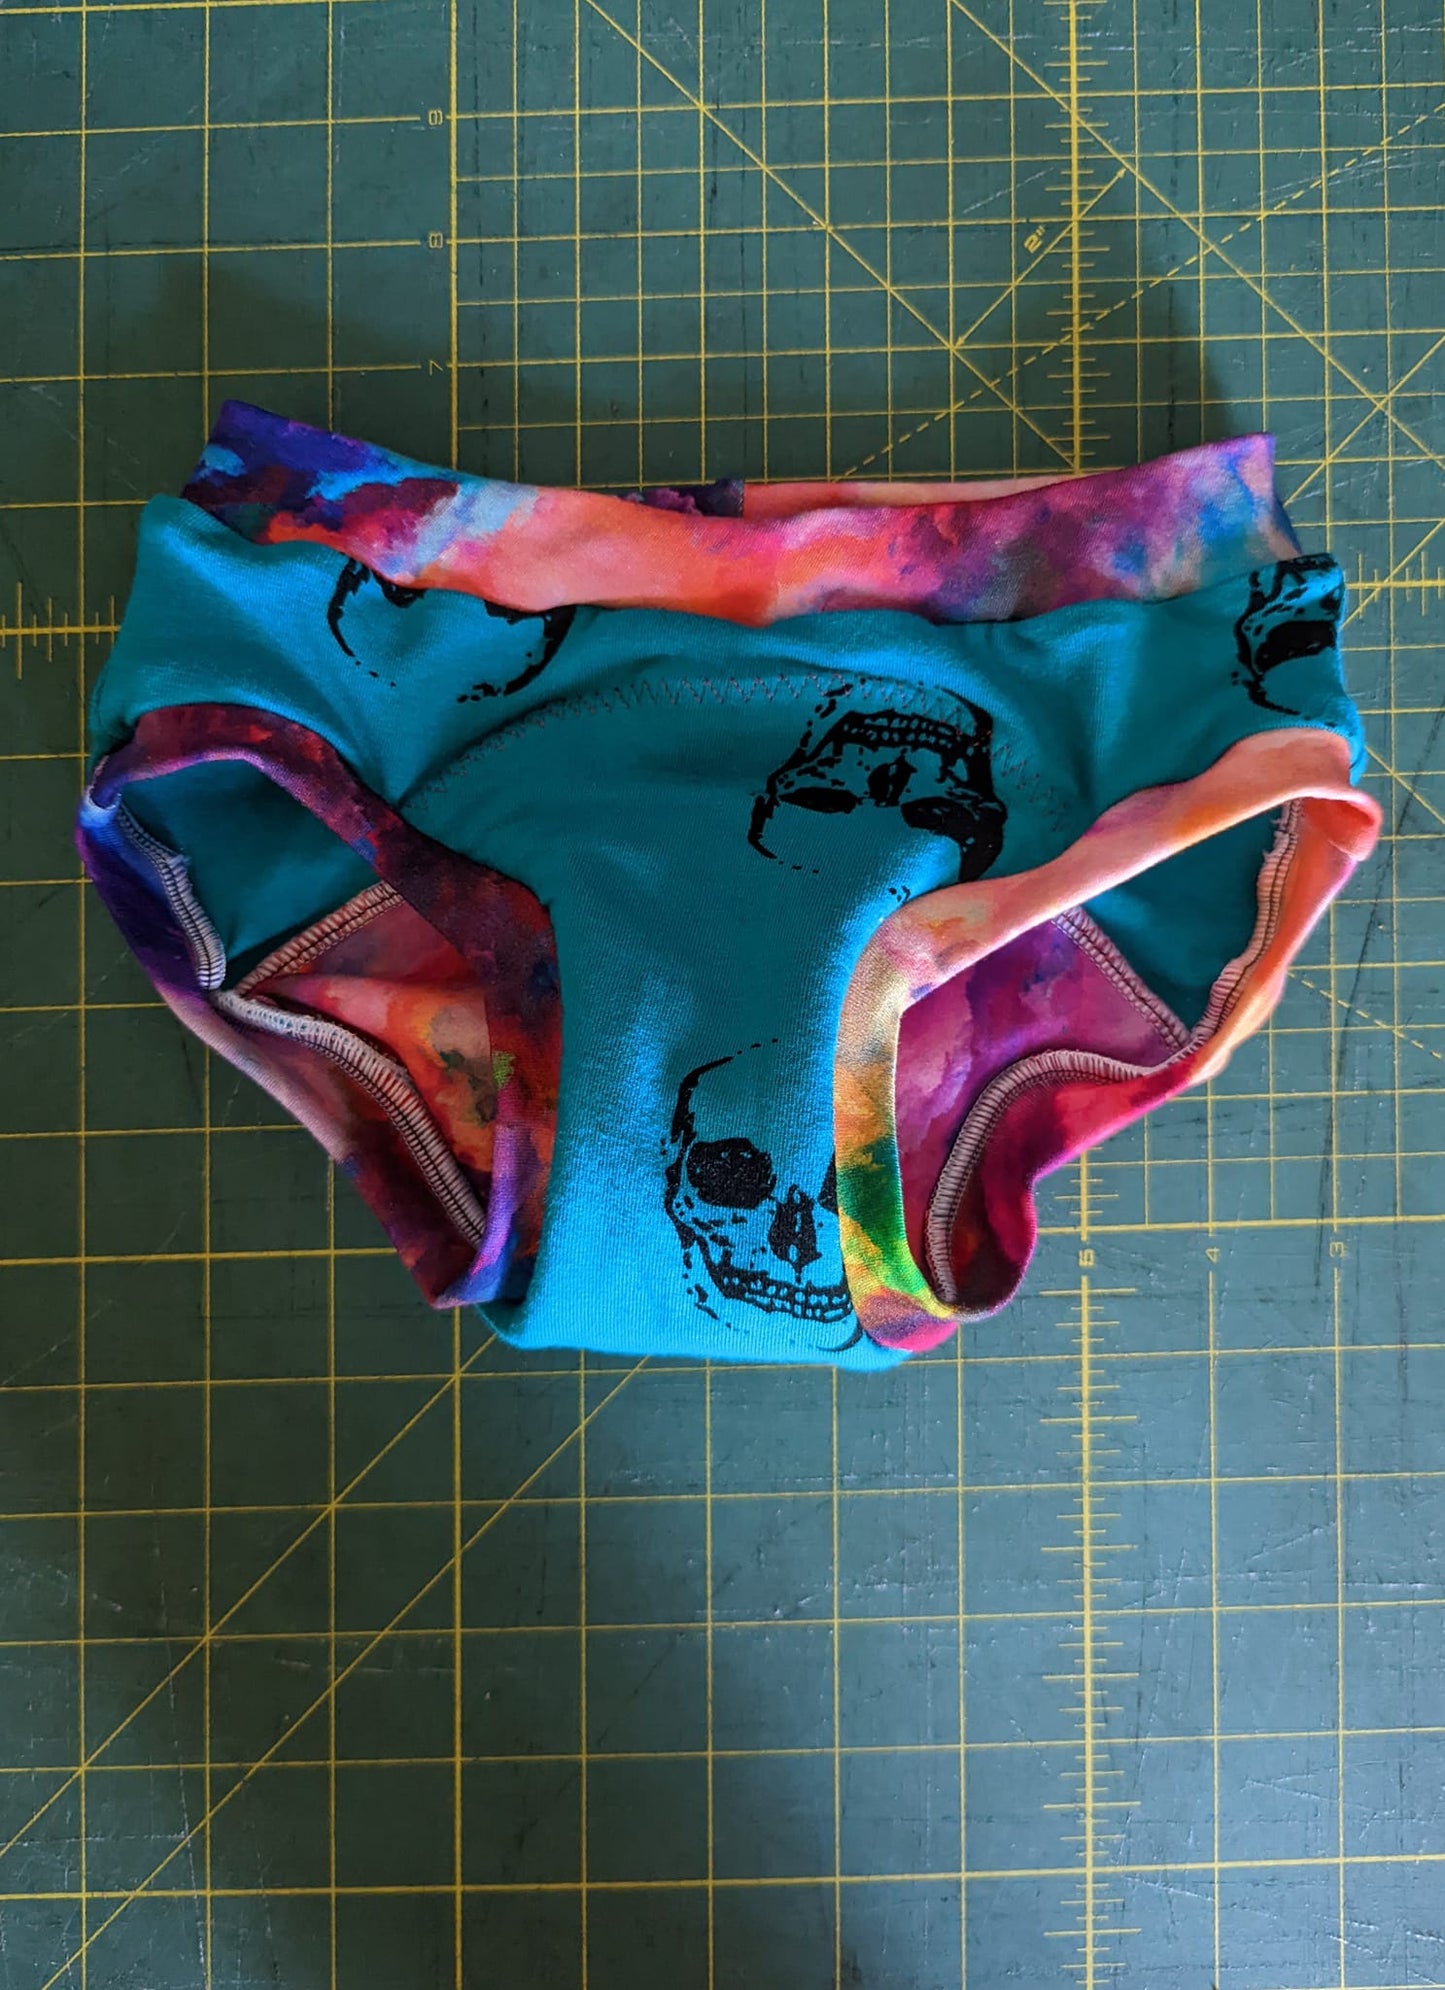 KIDS SIZE undies RockerByeBooties - PDF - Digital Pattern File for garment sewing underwear diaper cover training underwear menstruation